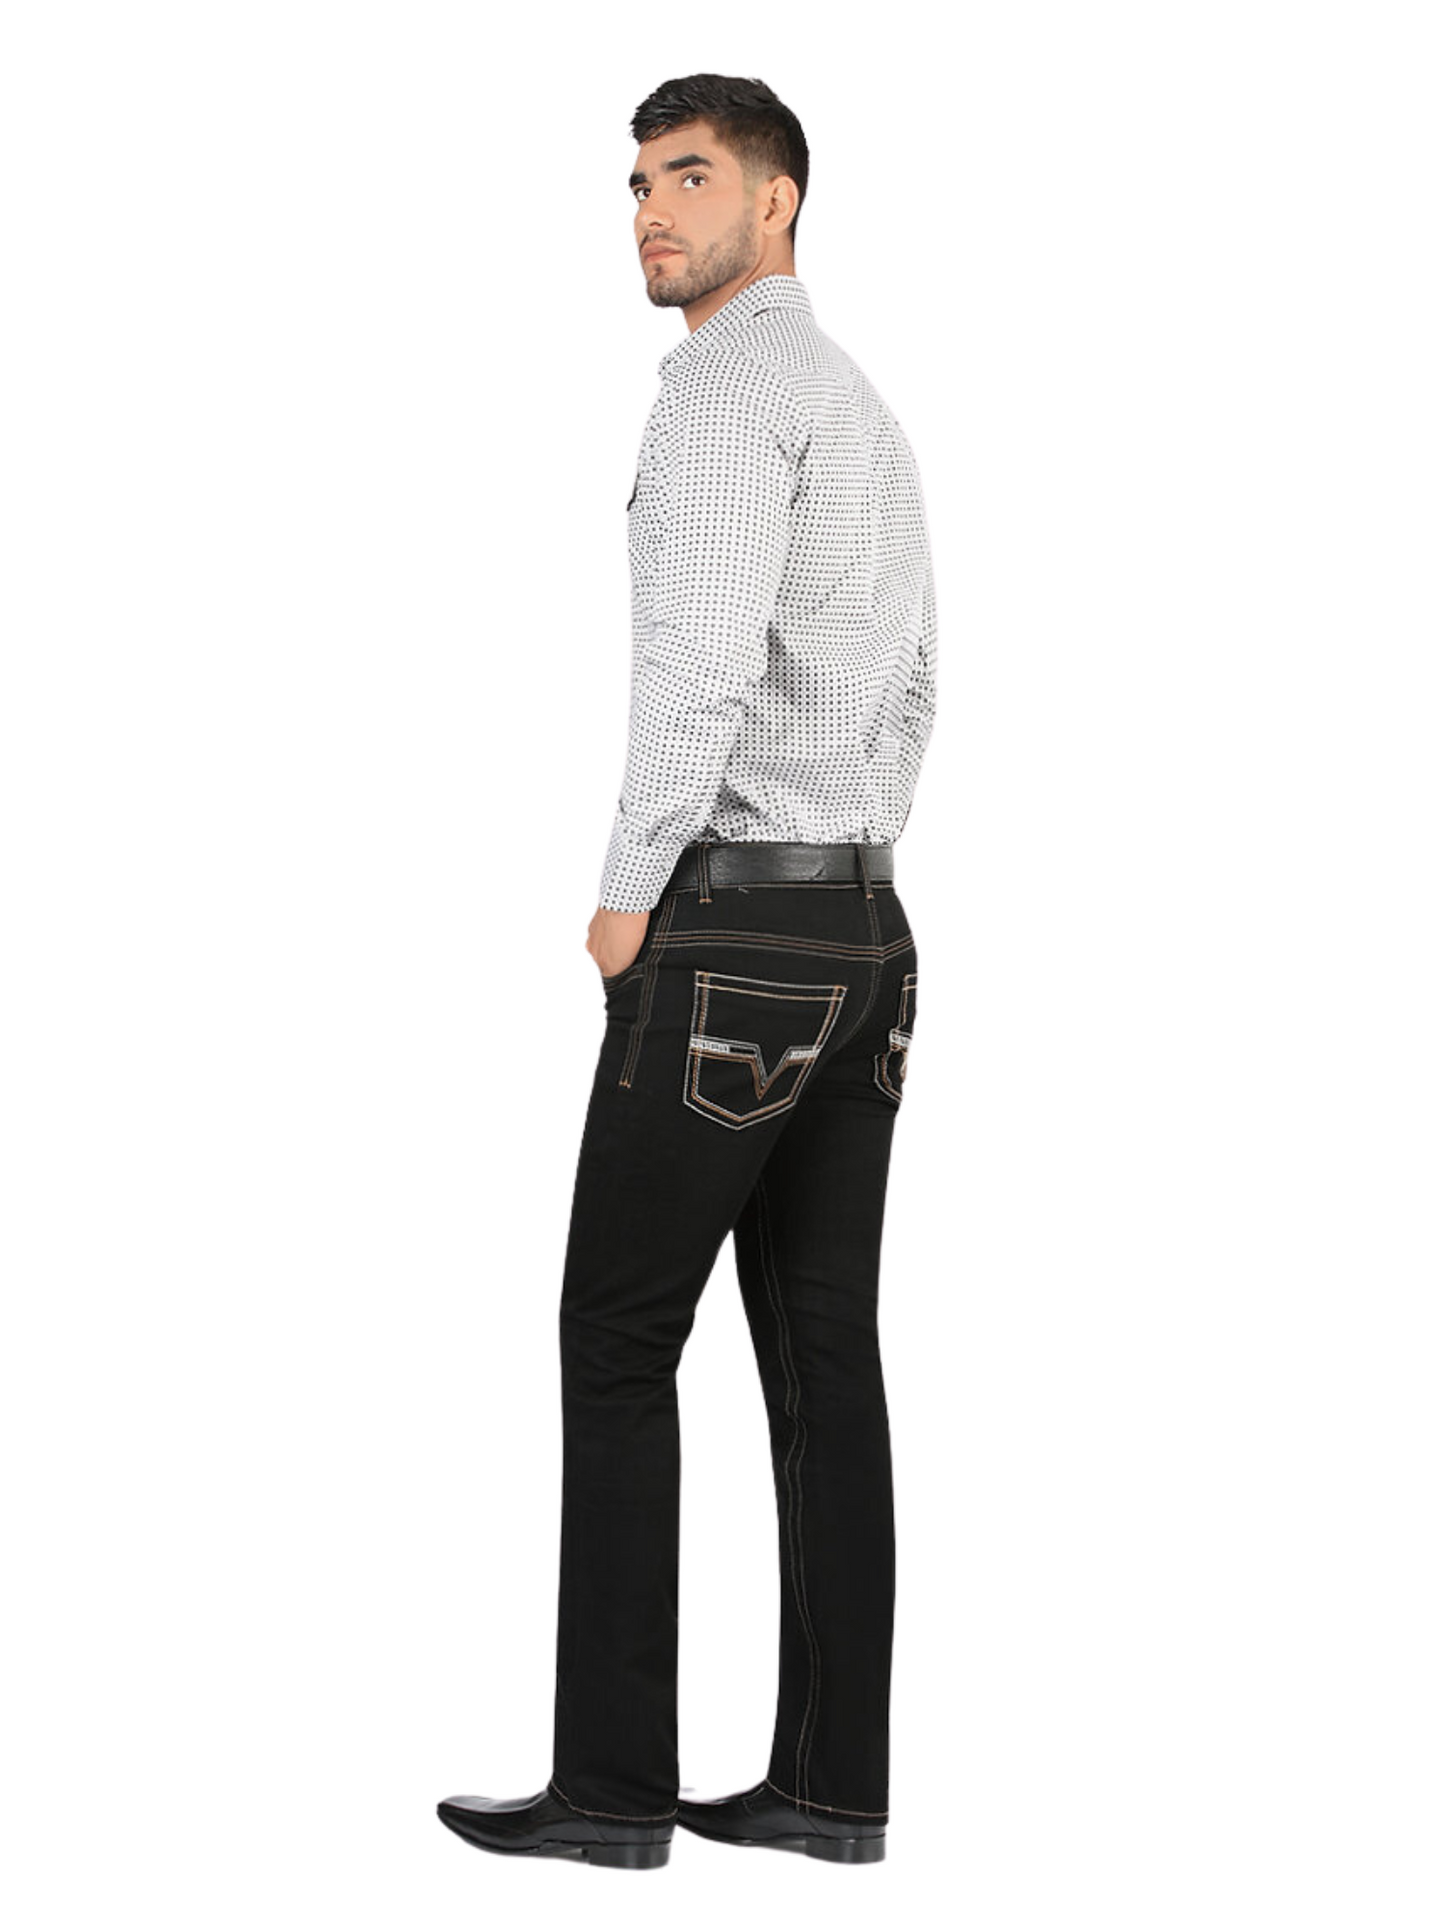 Stretch Denim Jeans for Men 'Montero' - ID: 5307 Denim Jeans Montero